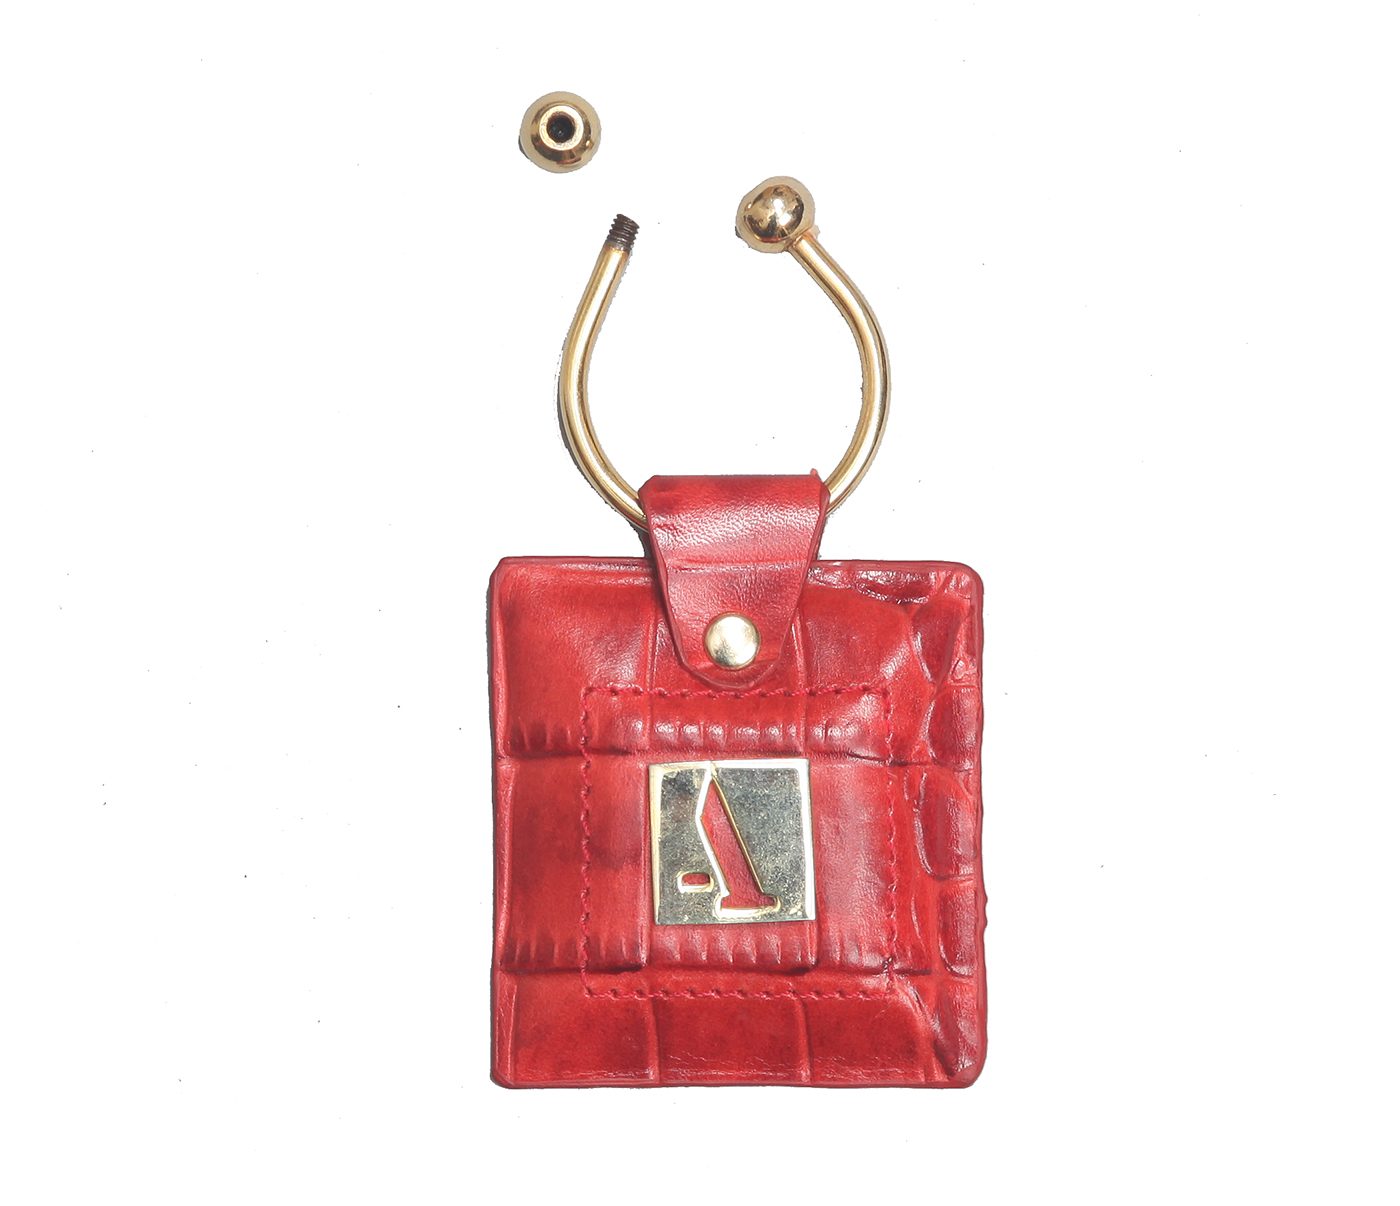 W269--Key holder with knob screw key fitting in Genuine Leather - Red